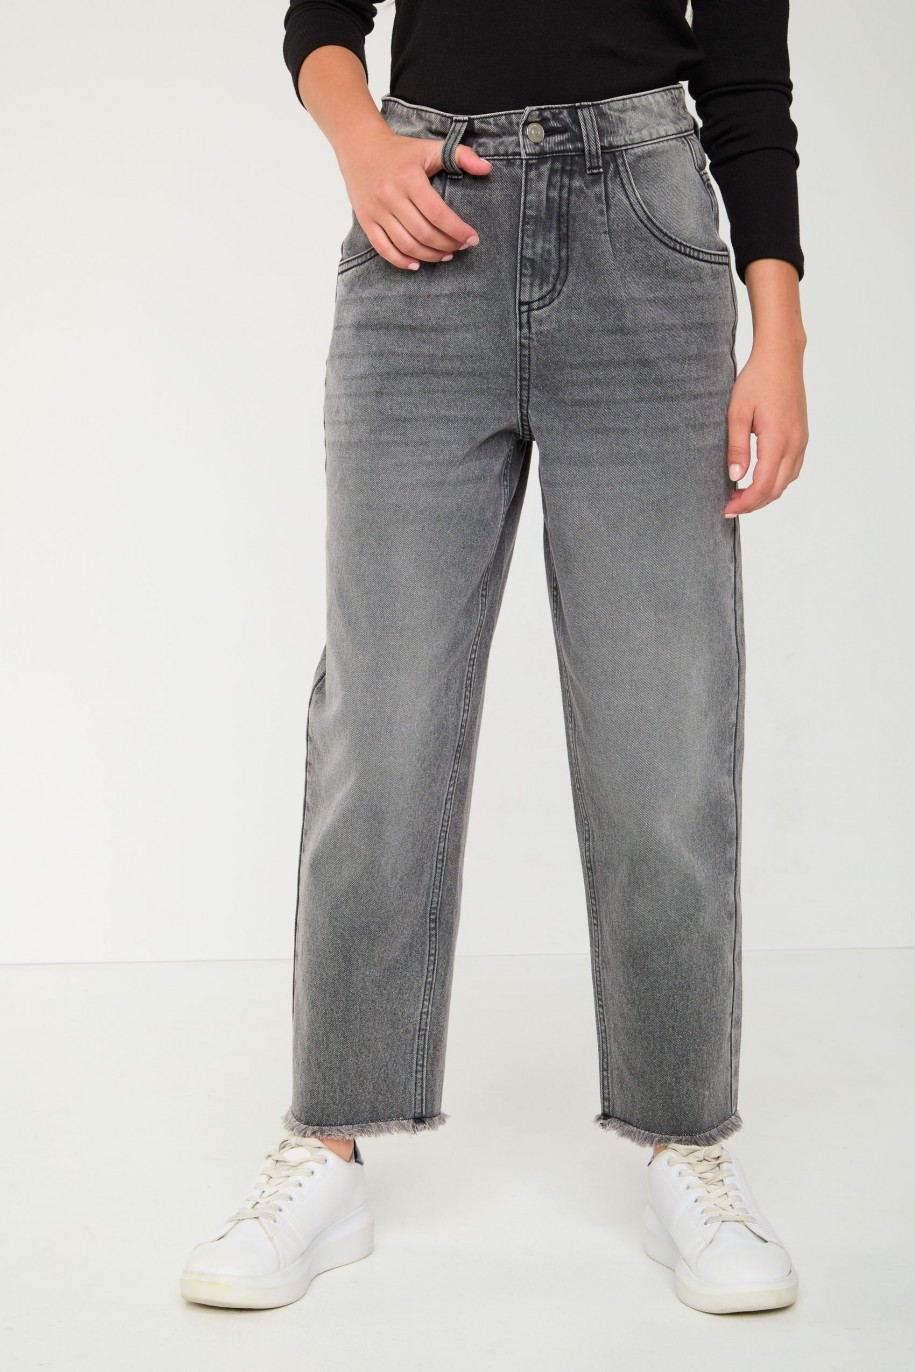 Szare jeansy typu SLOUCHY - 43840